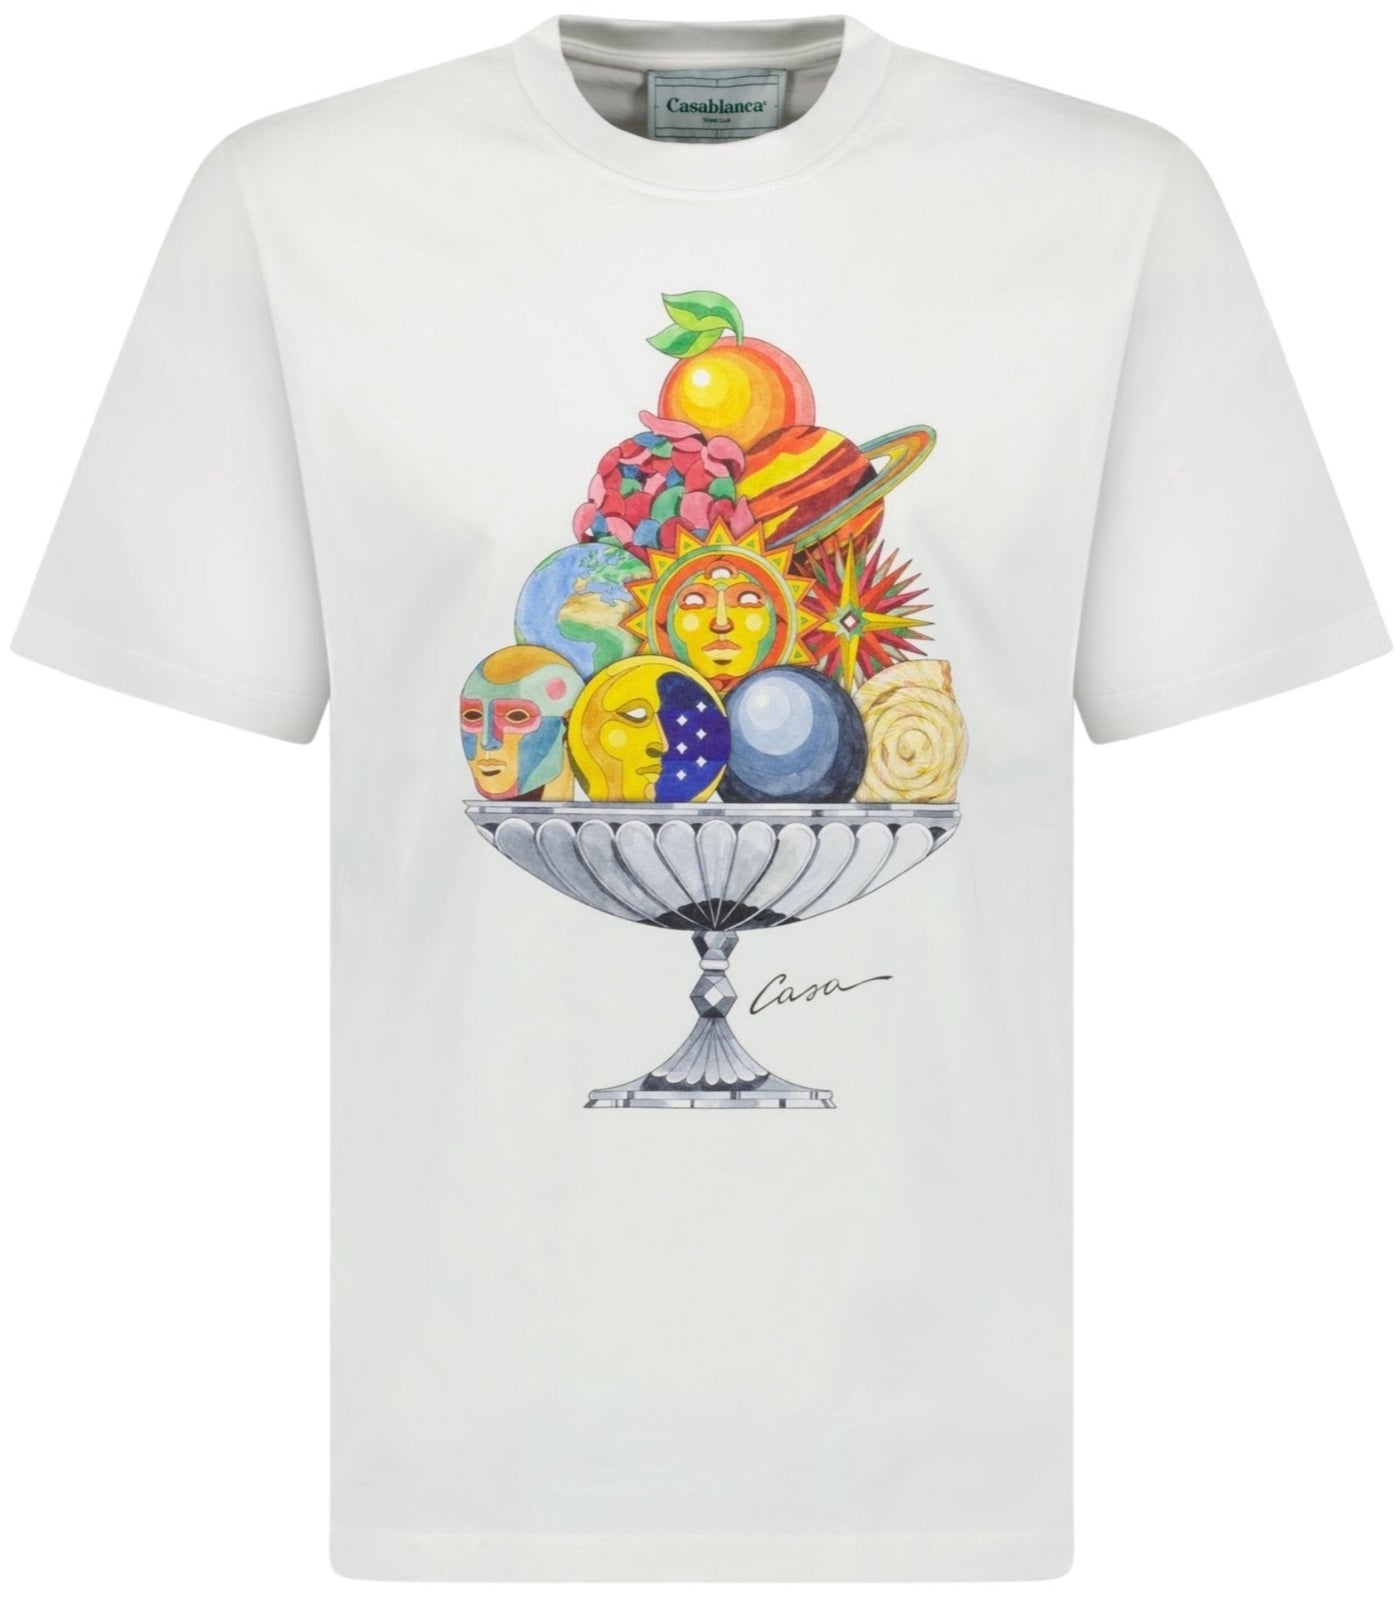 Casablanca Celestial Pyramid Fruit Bowl T-shirt in White